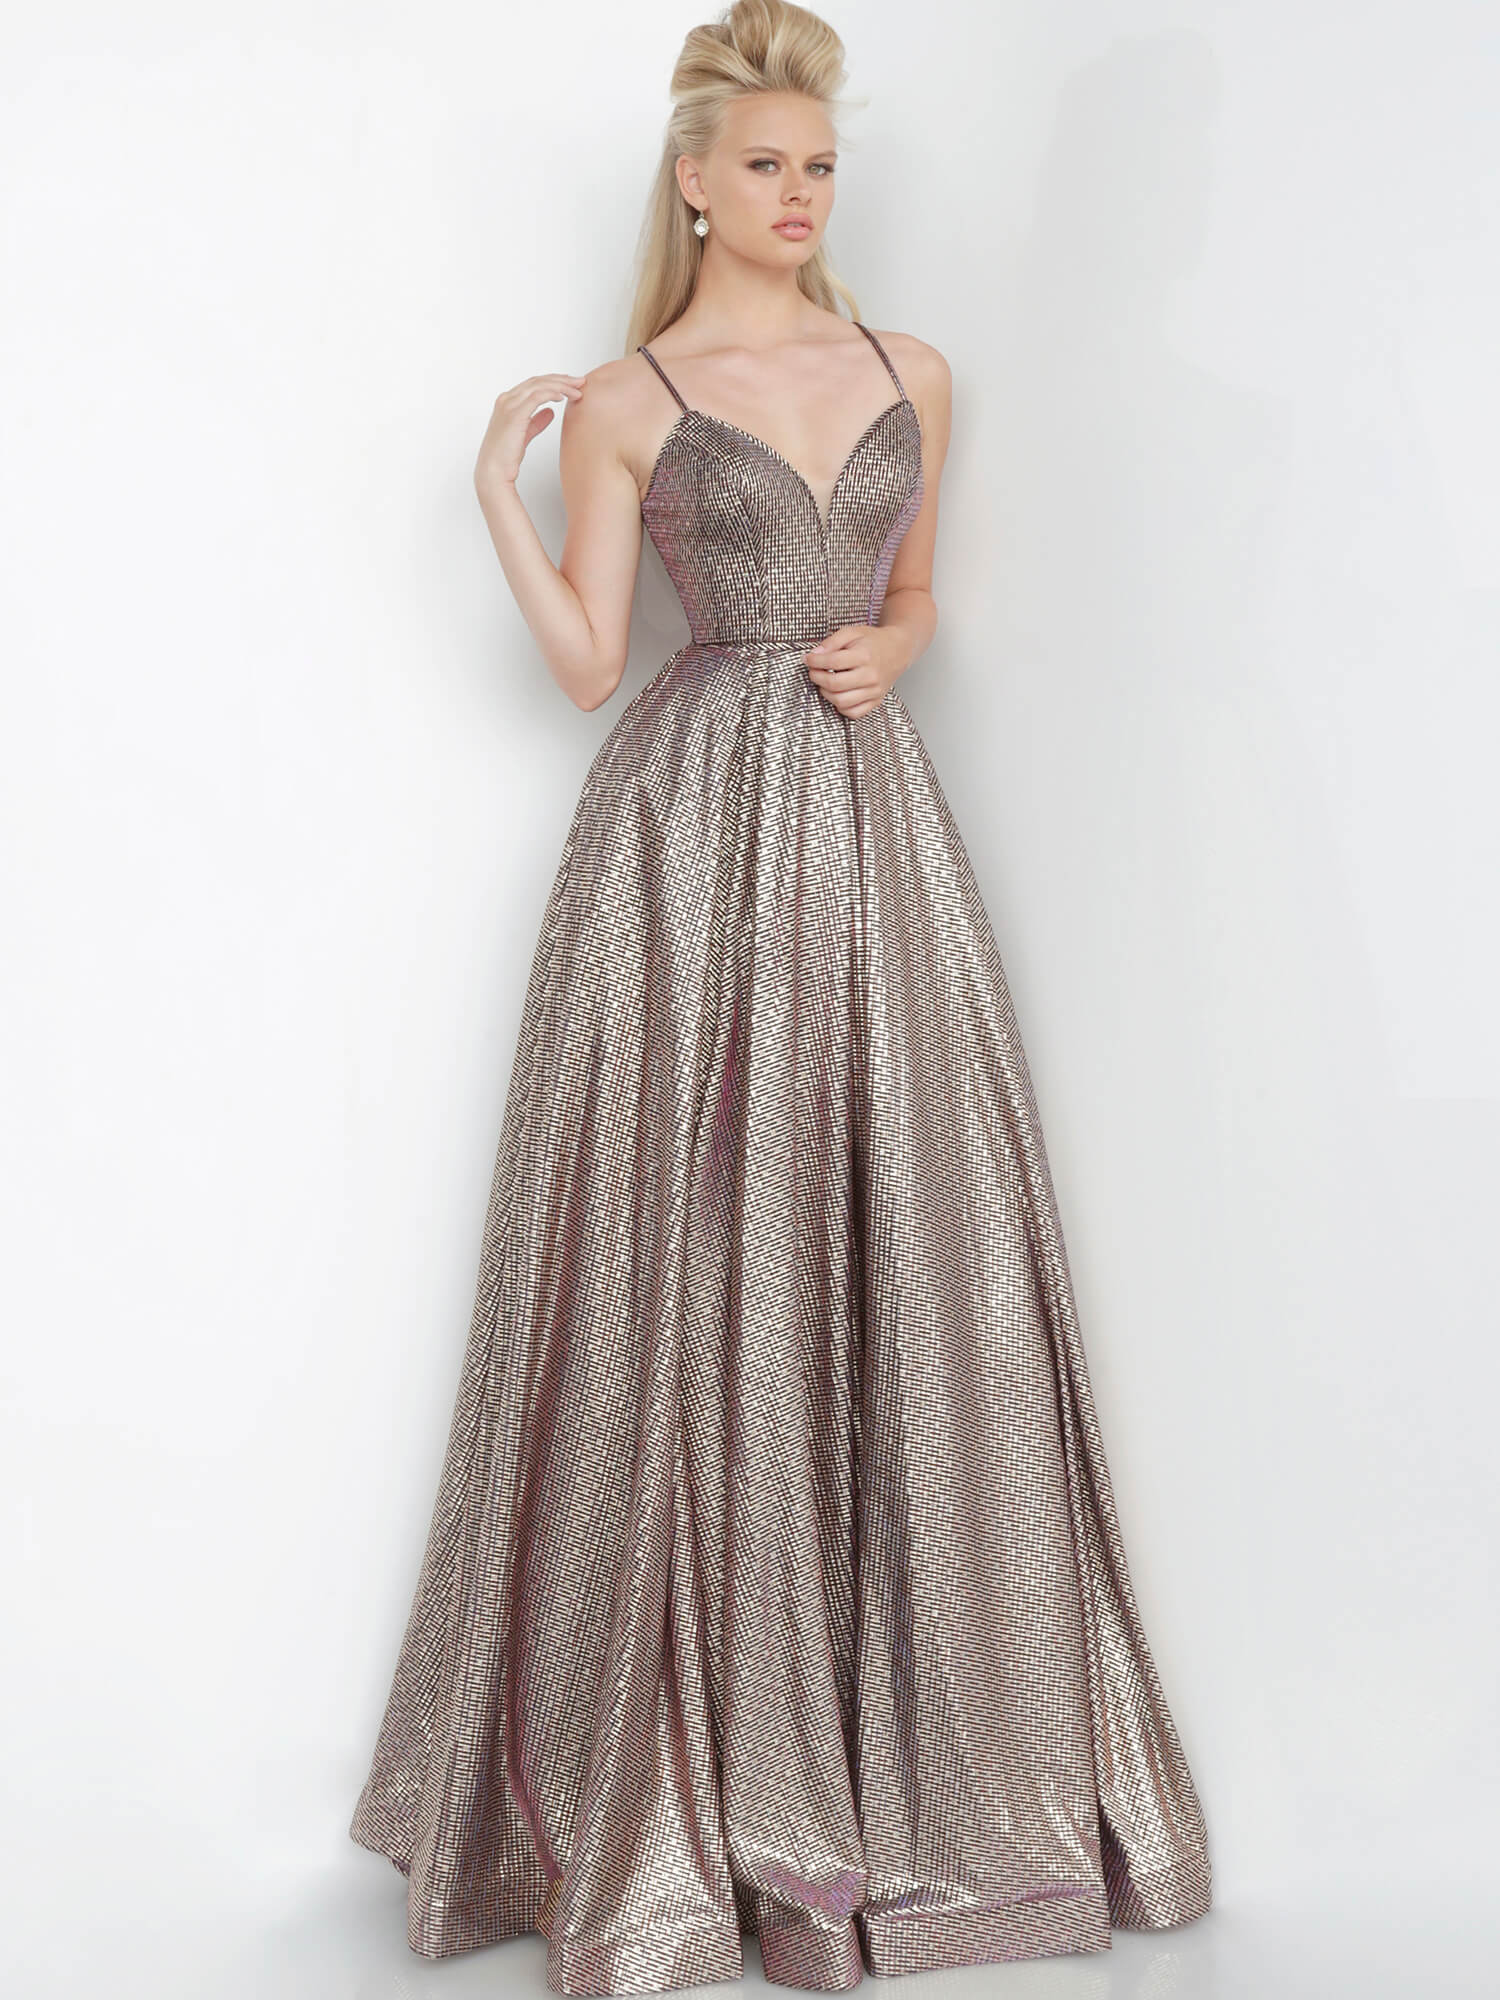 JVN02317 v neckline a line metallic gold purple prom dress evening gown pageant dress 